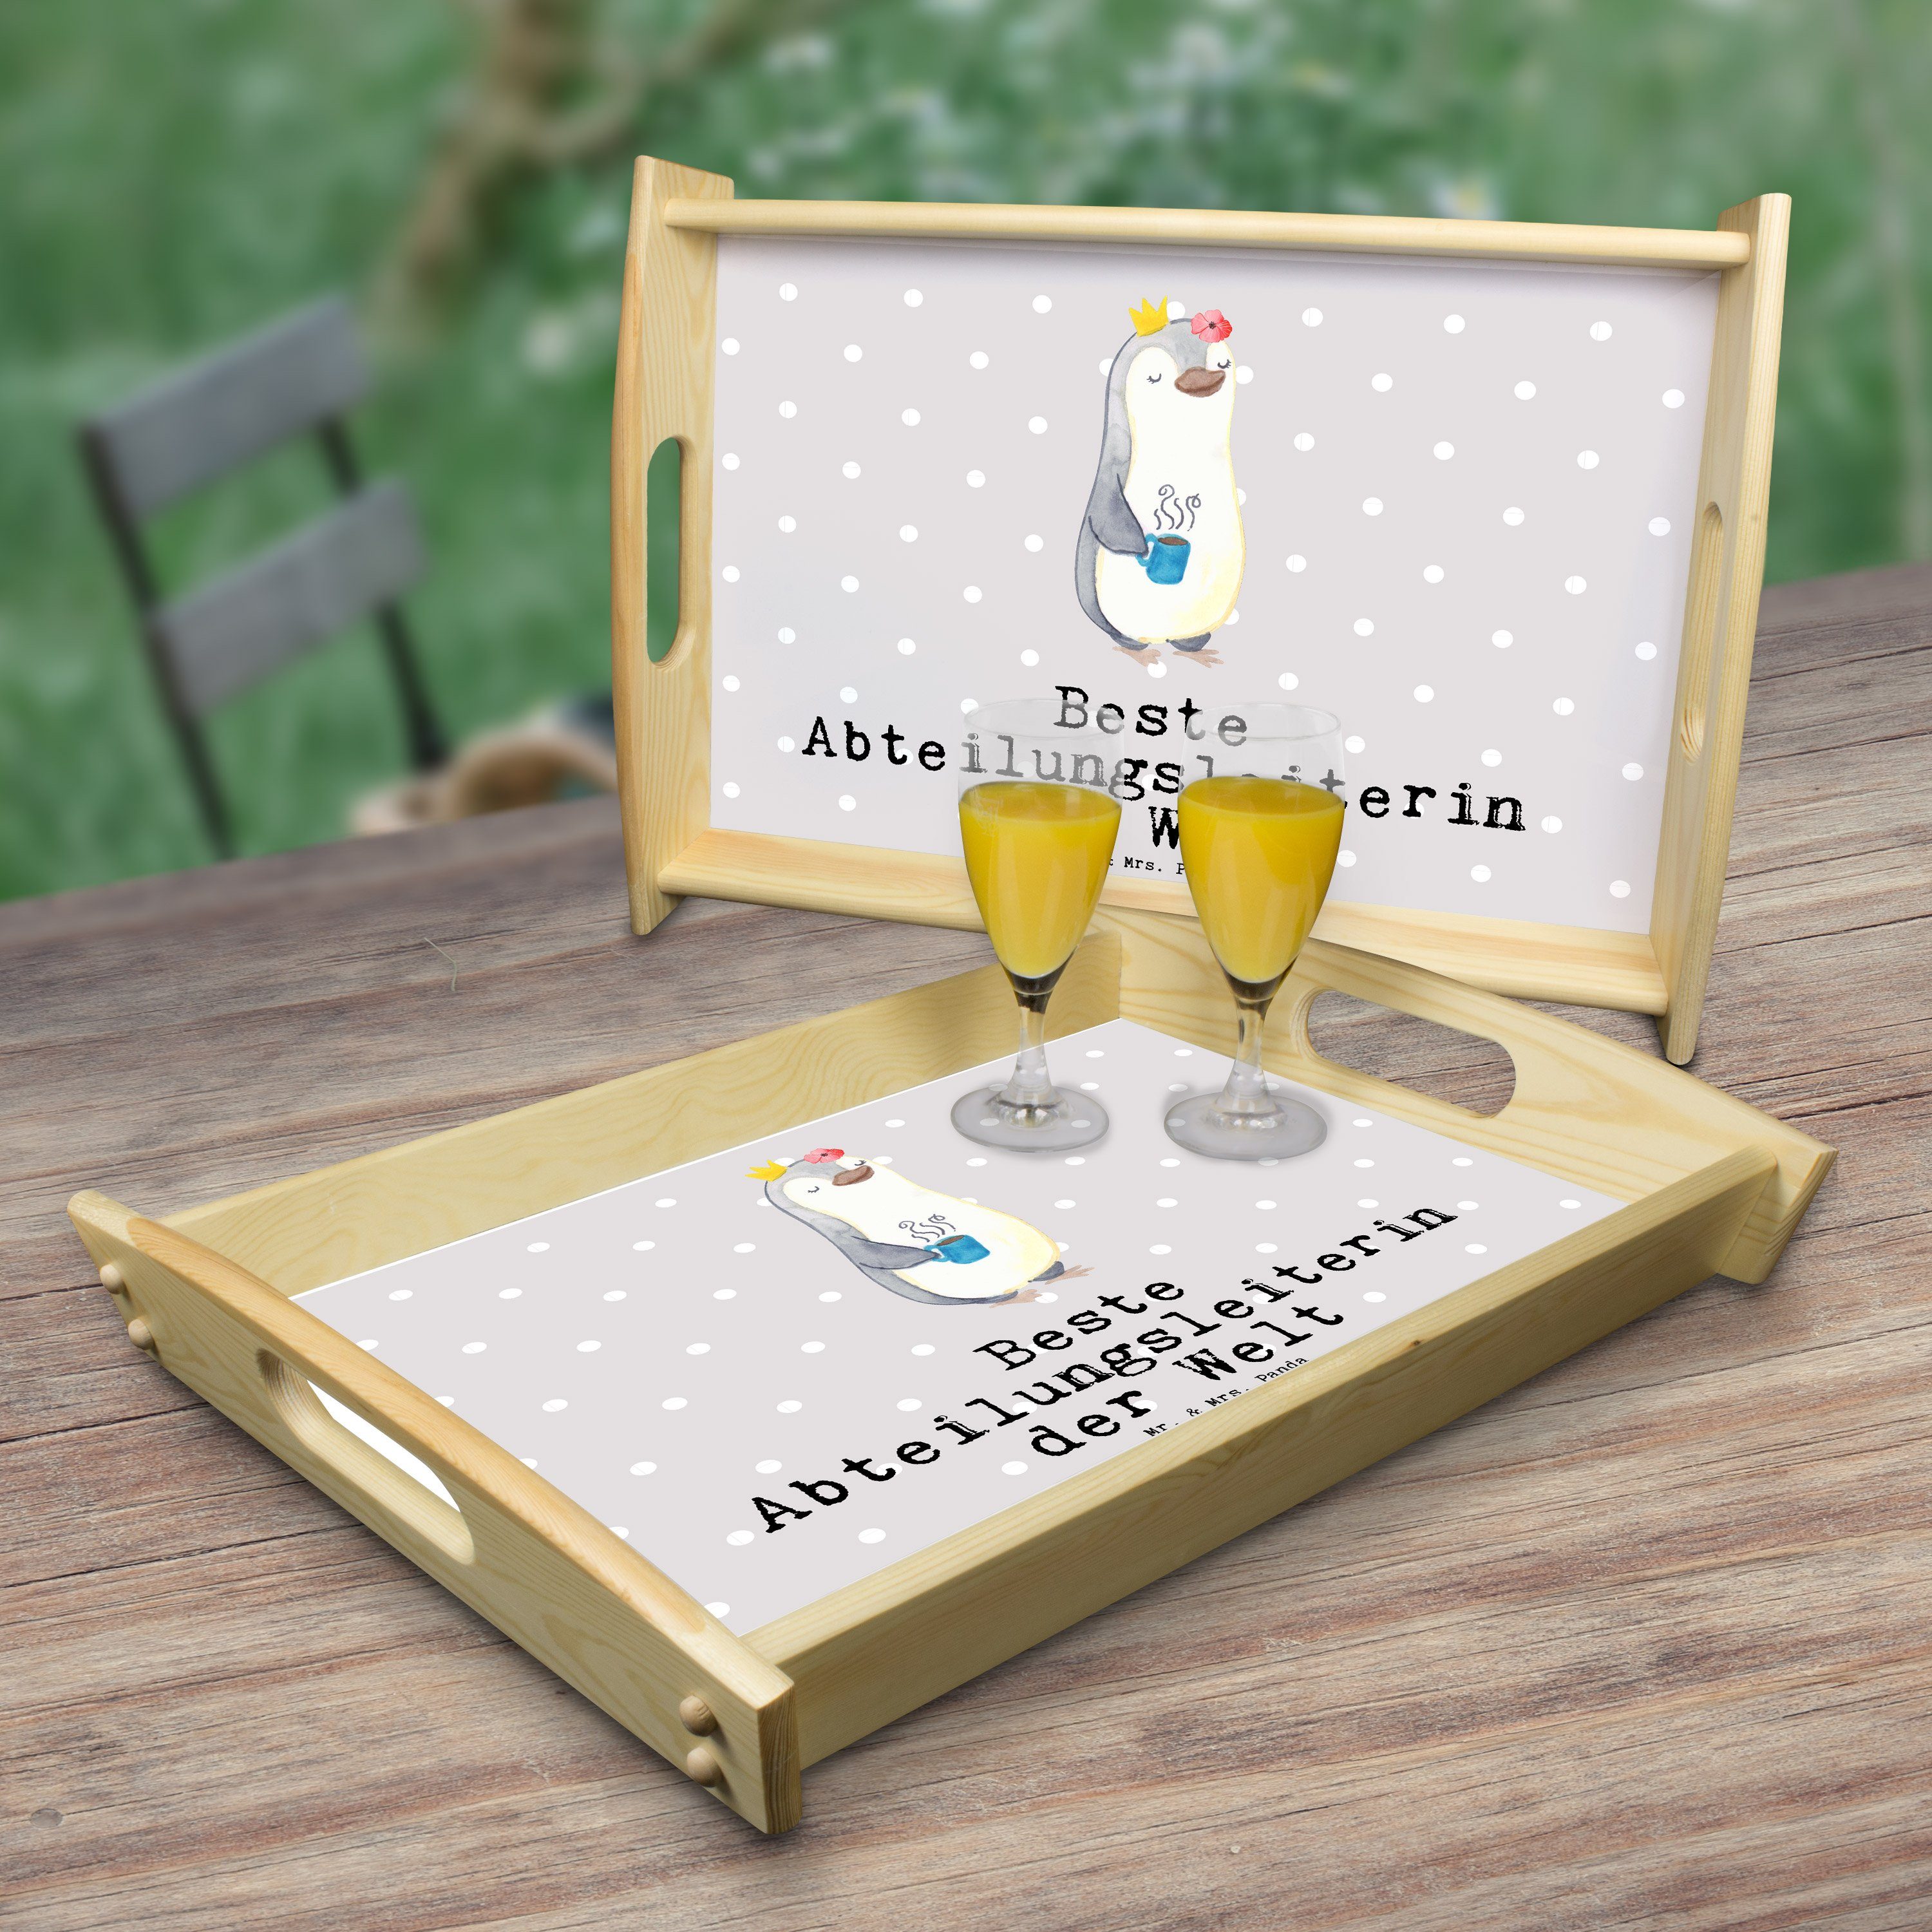 Mr. & Panda (1-tlg) Welt Pastell Echtholz Tablett Geschenk, Mrs. - - lasiert, Abteilungsleiterin Beste Pinguin Grau der